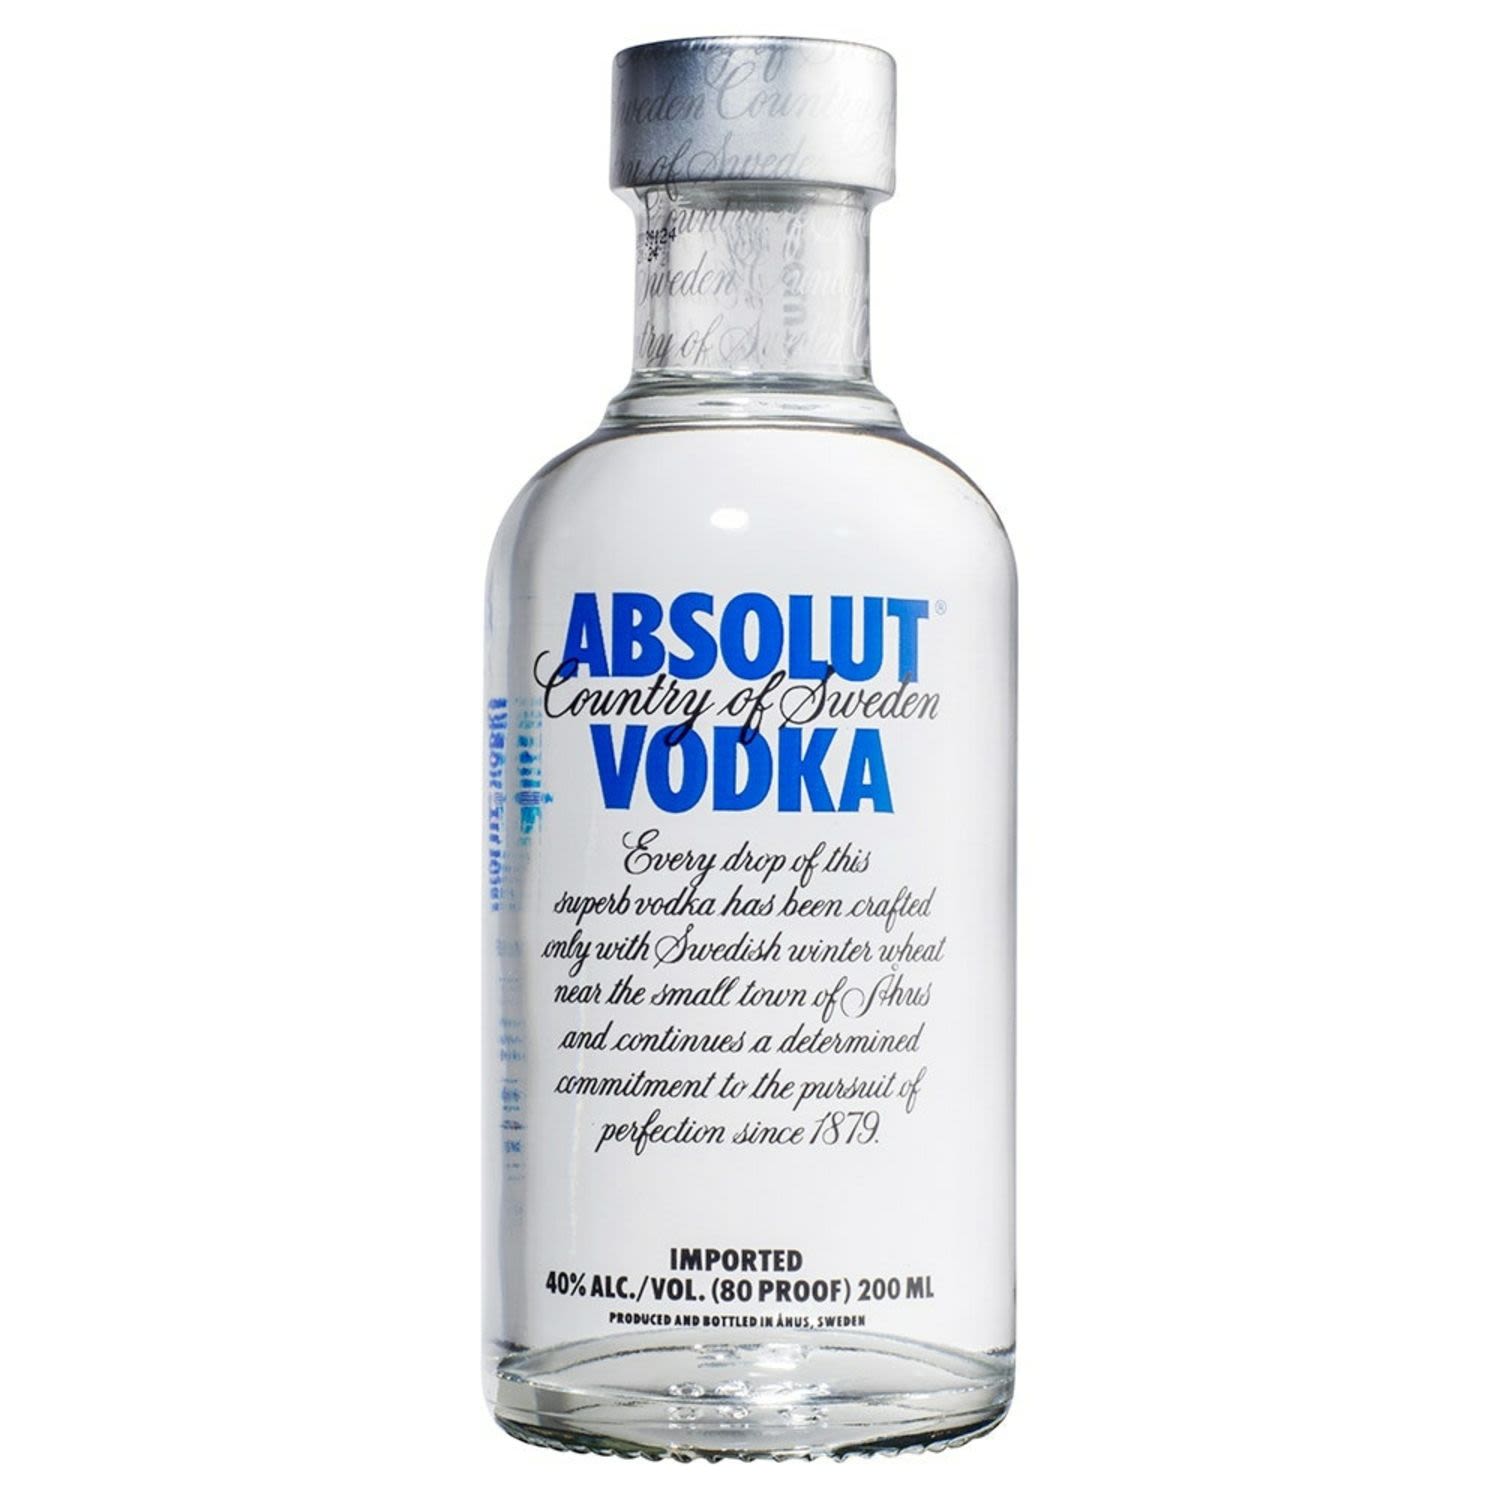 Absolut Vodka 200mL Bottle